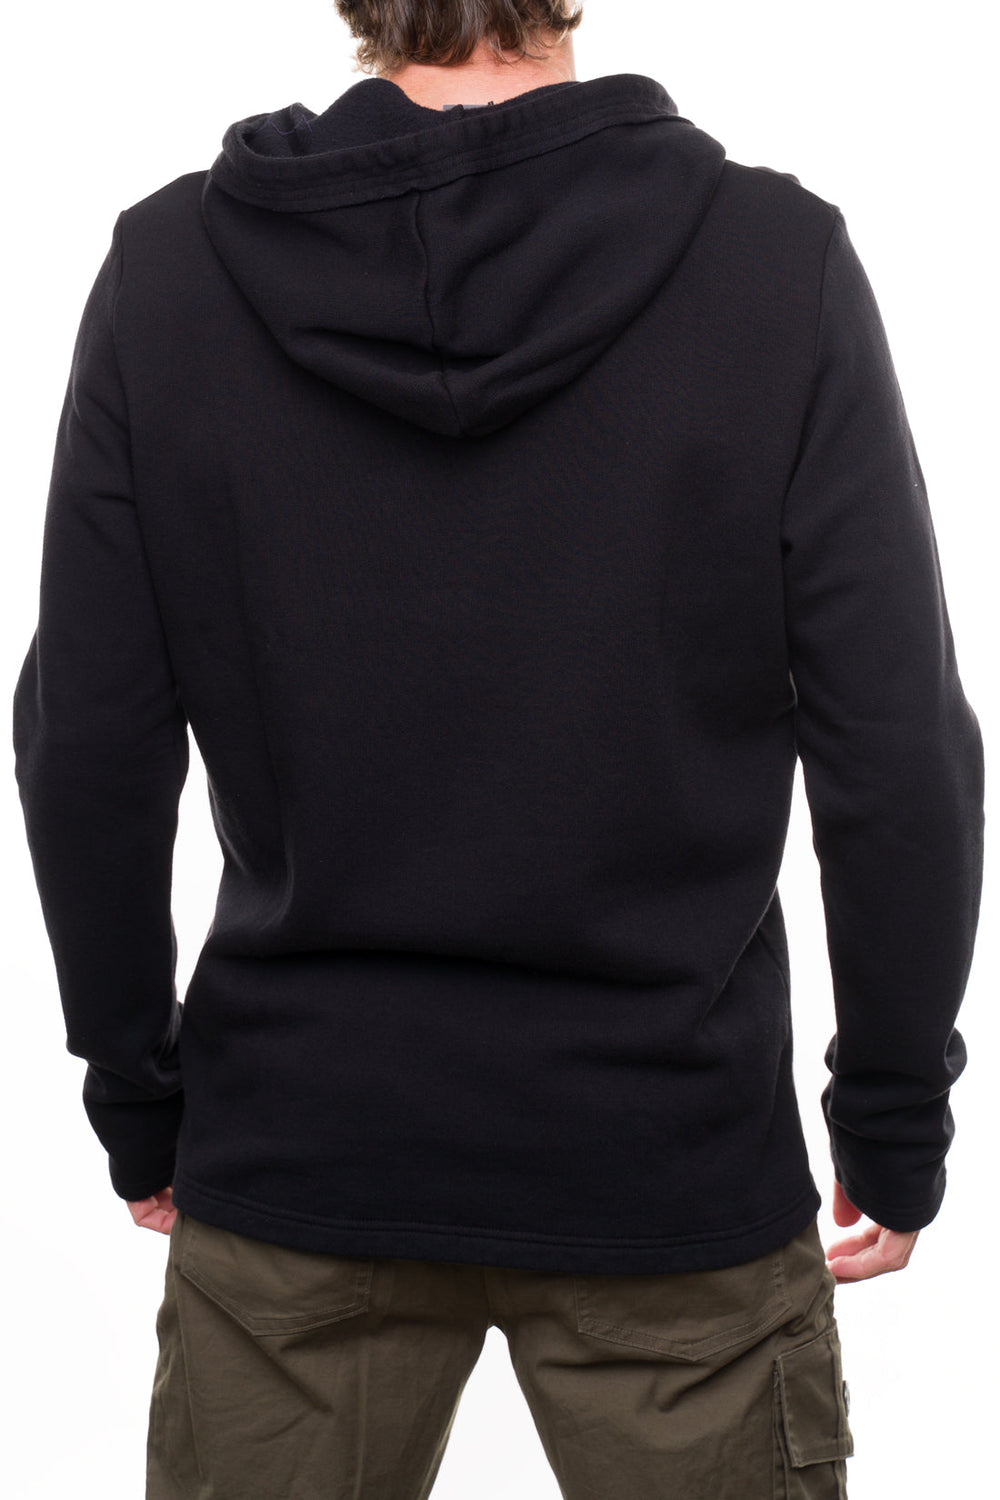 Black organic cotton men's hoodie